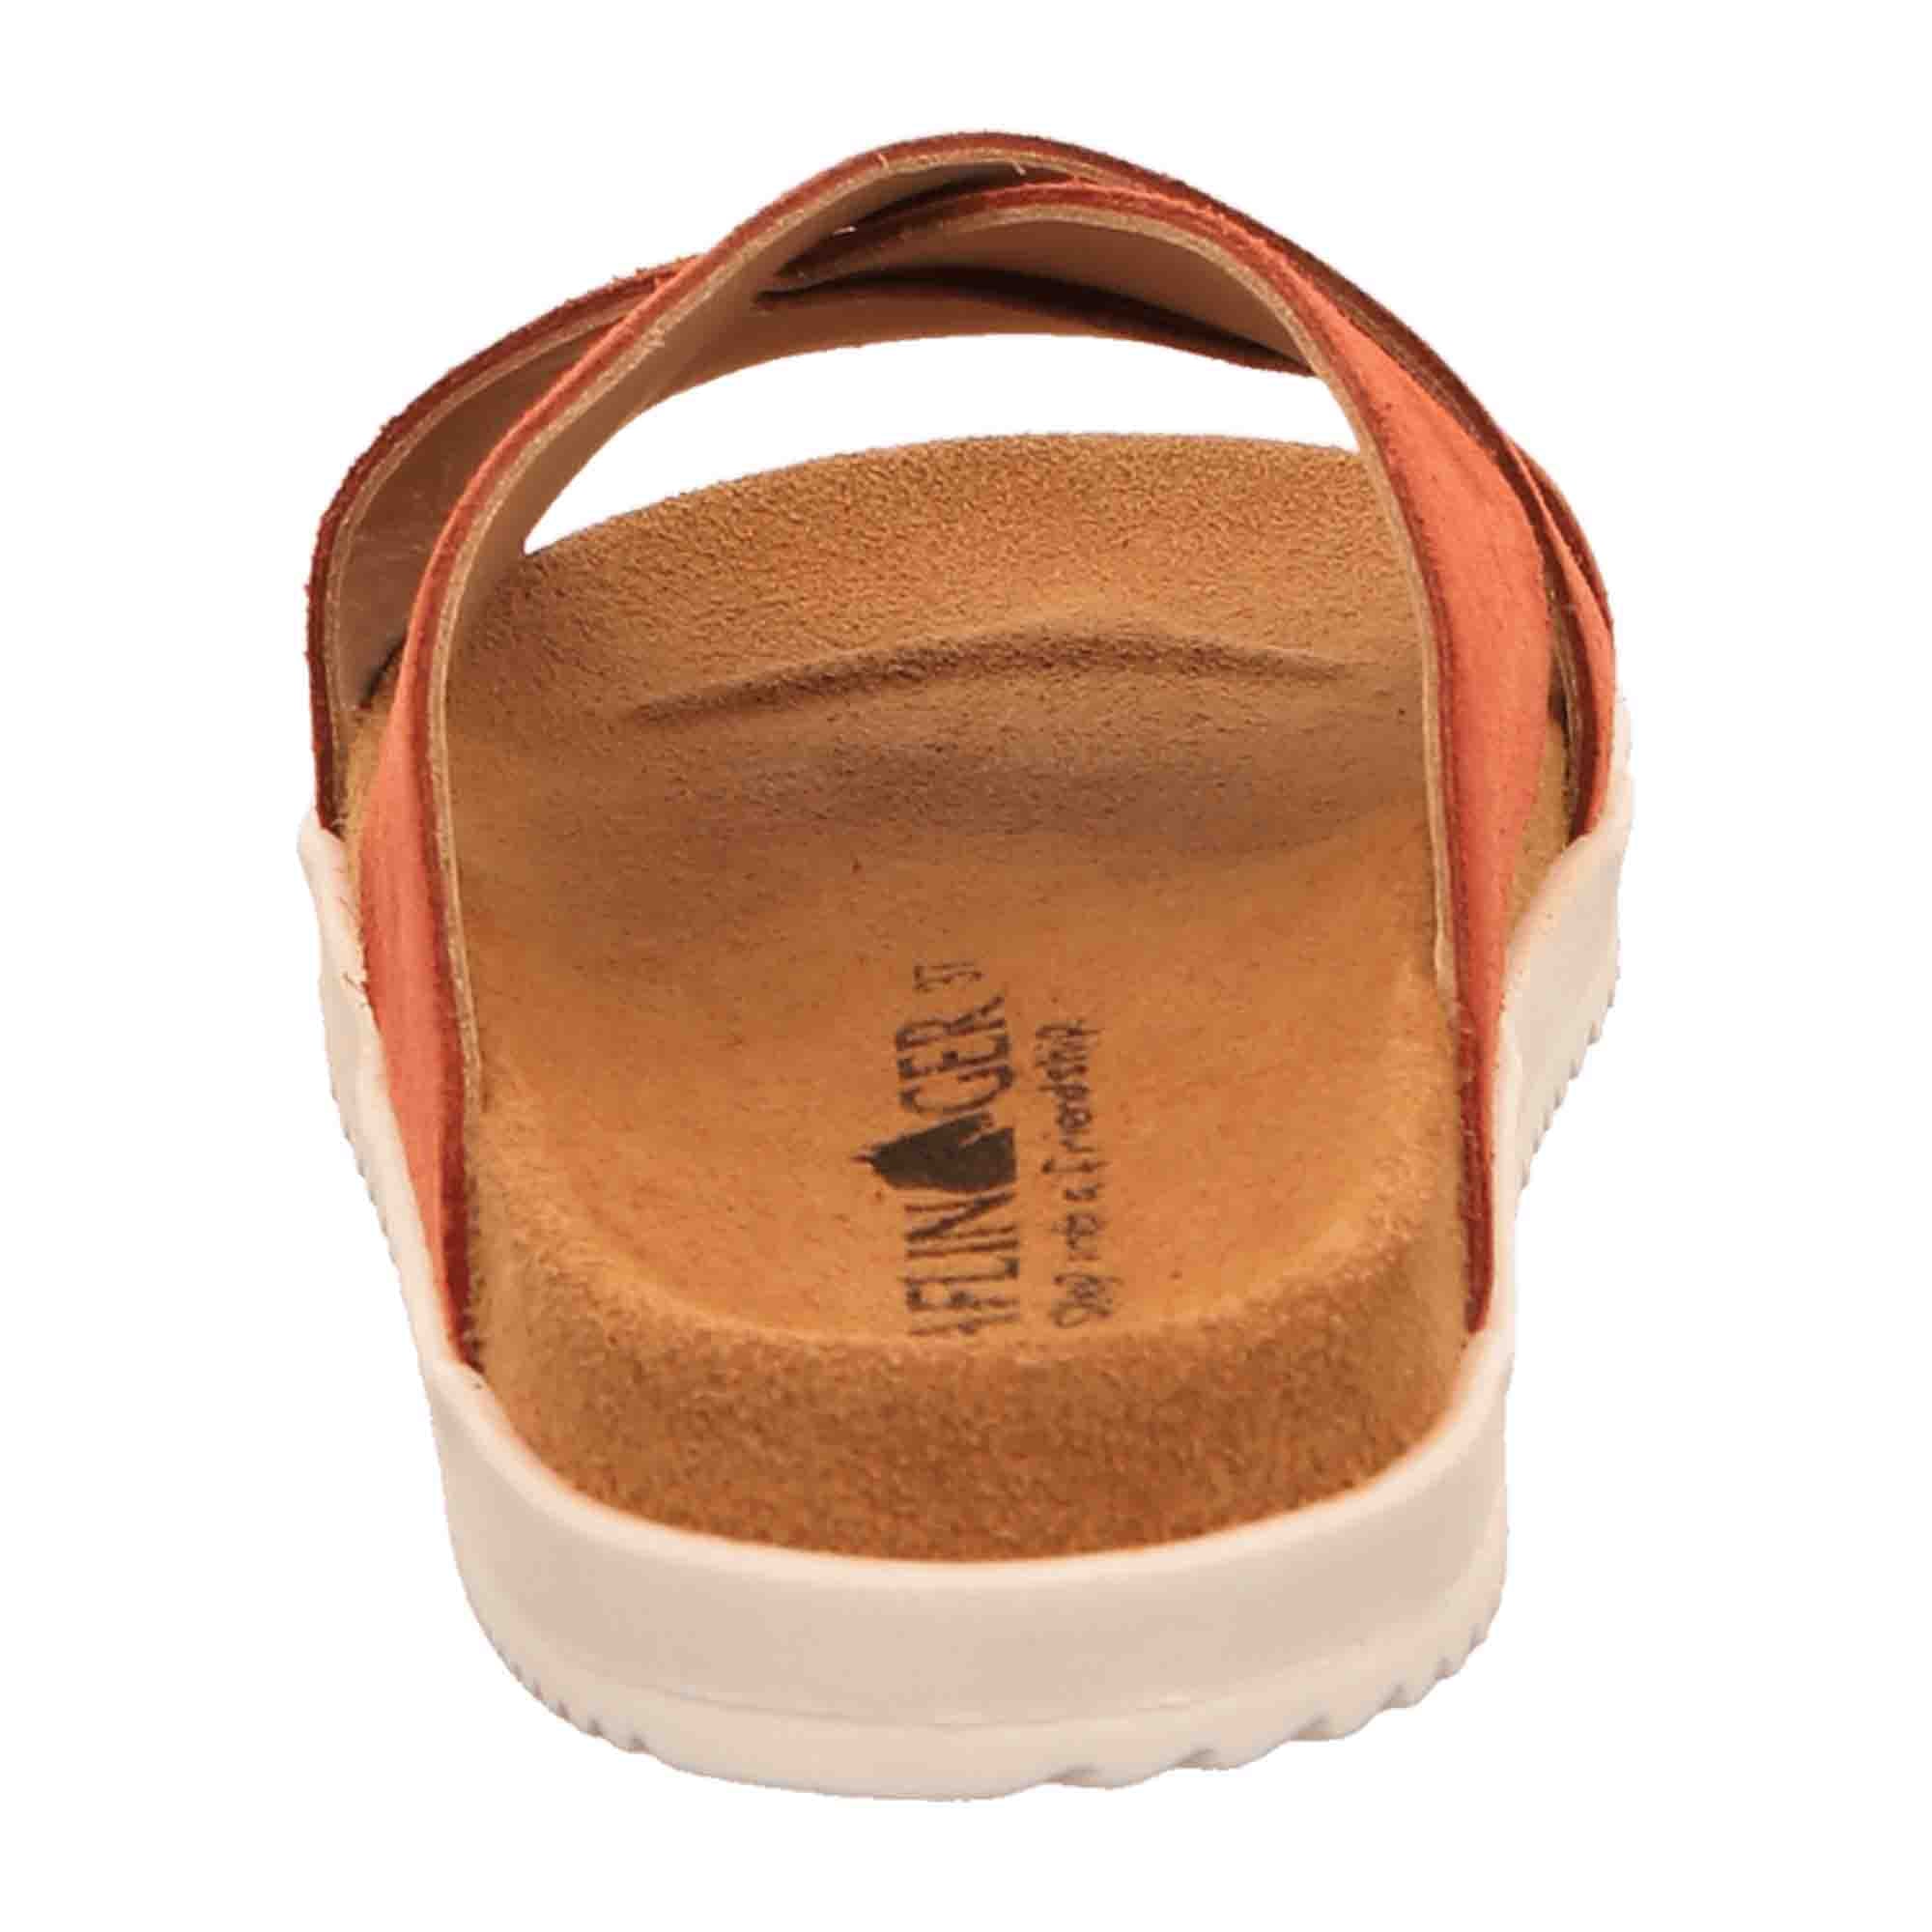 Haflinger 866008 Women's Orange Comfort Slippers - Stylish & Durable